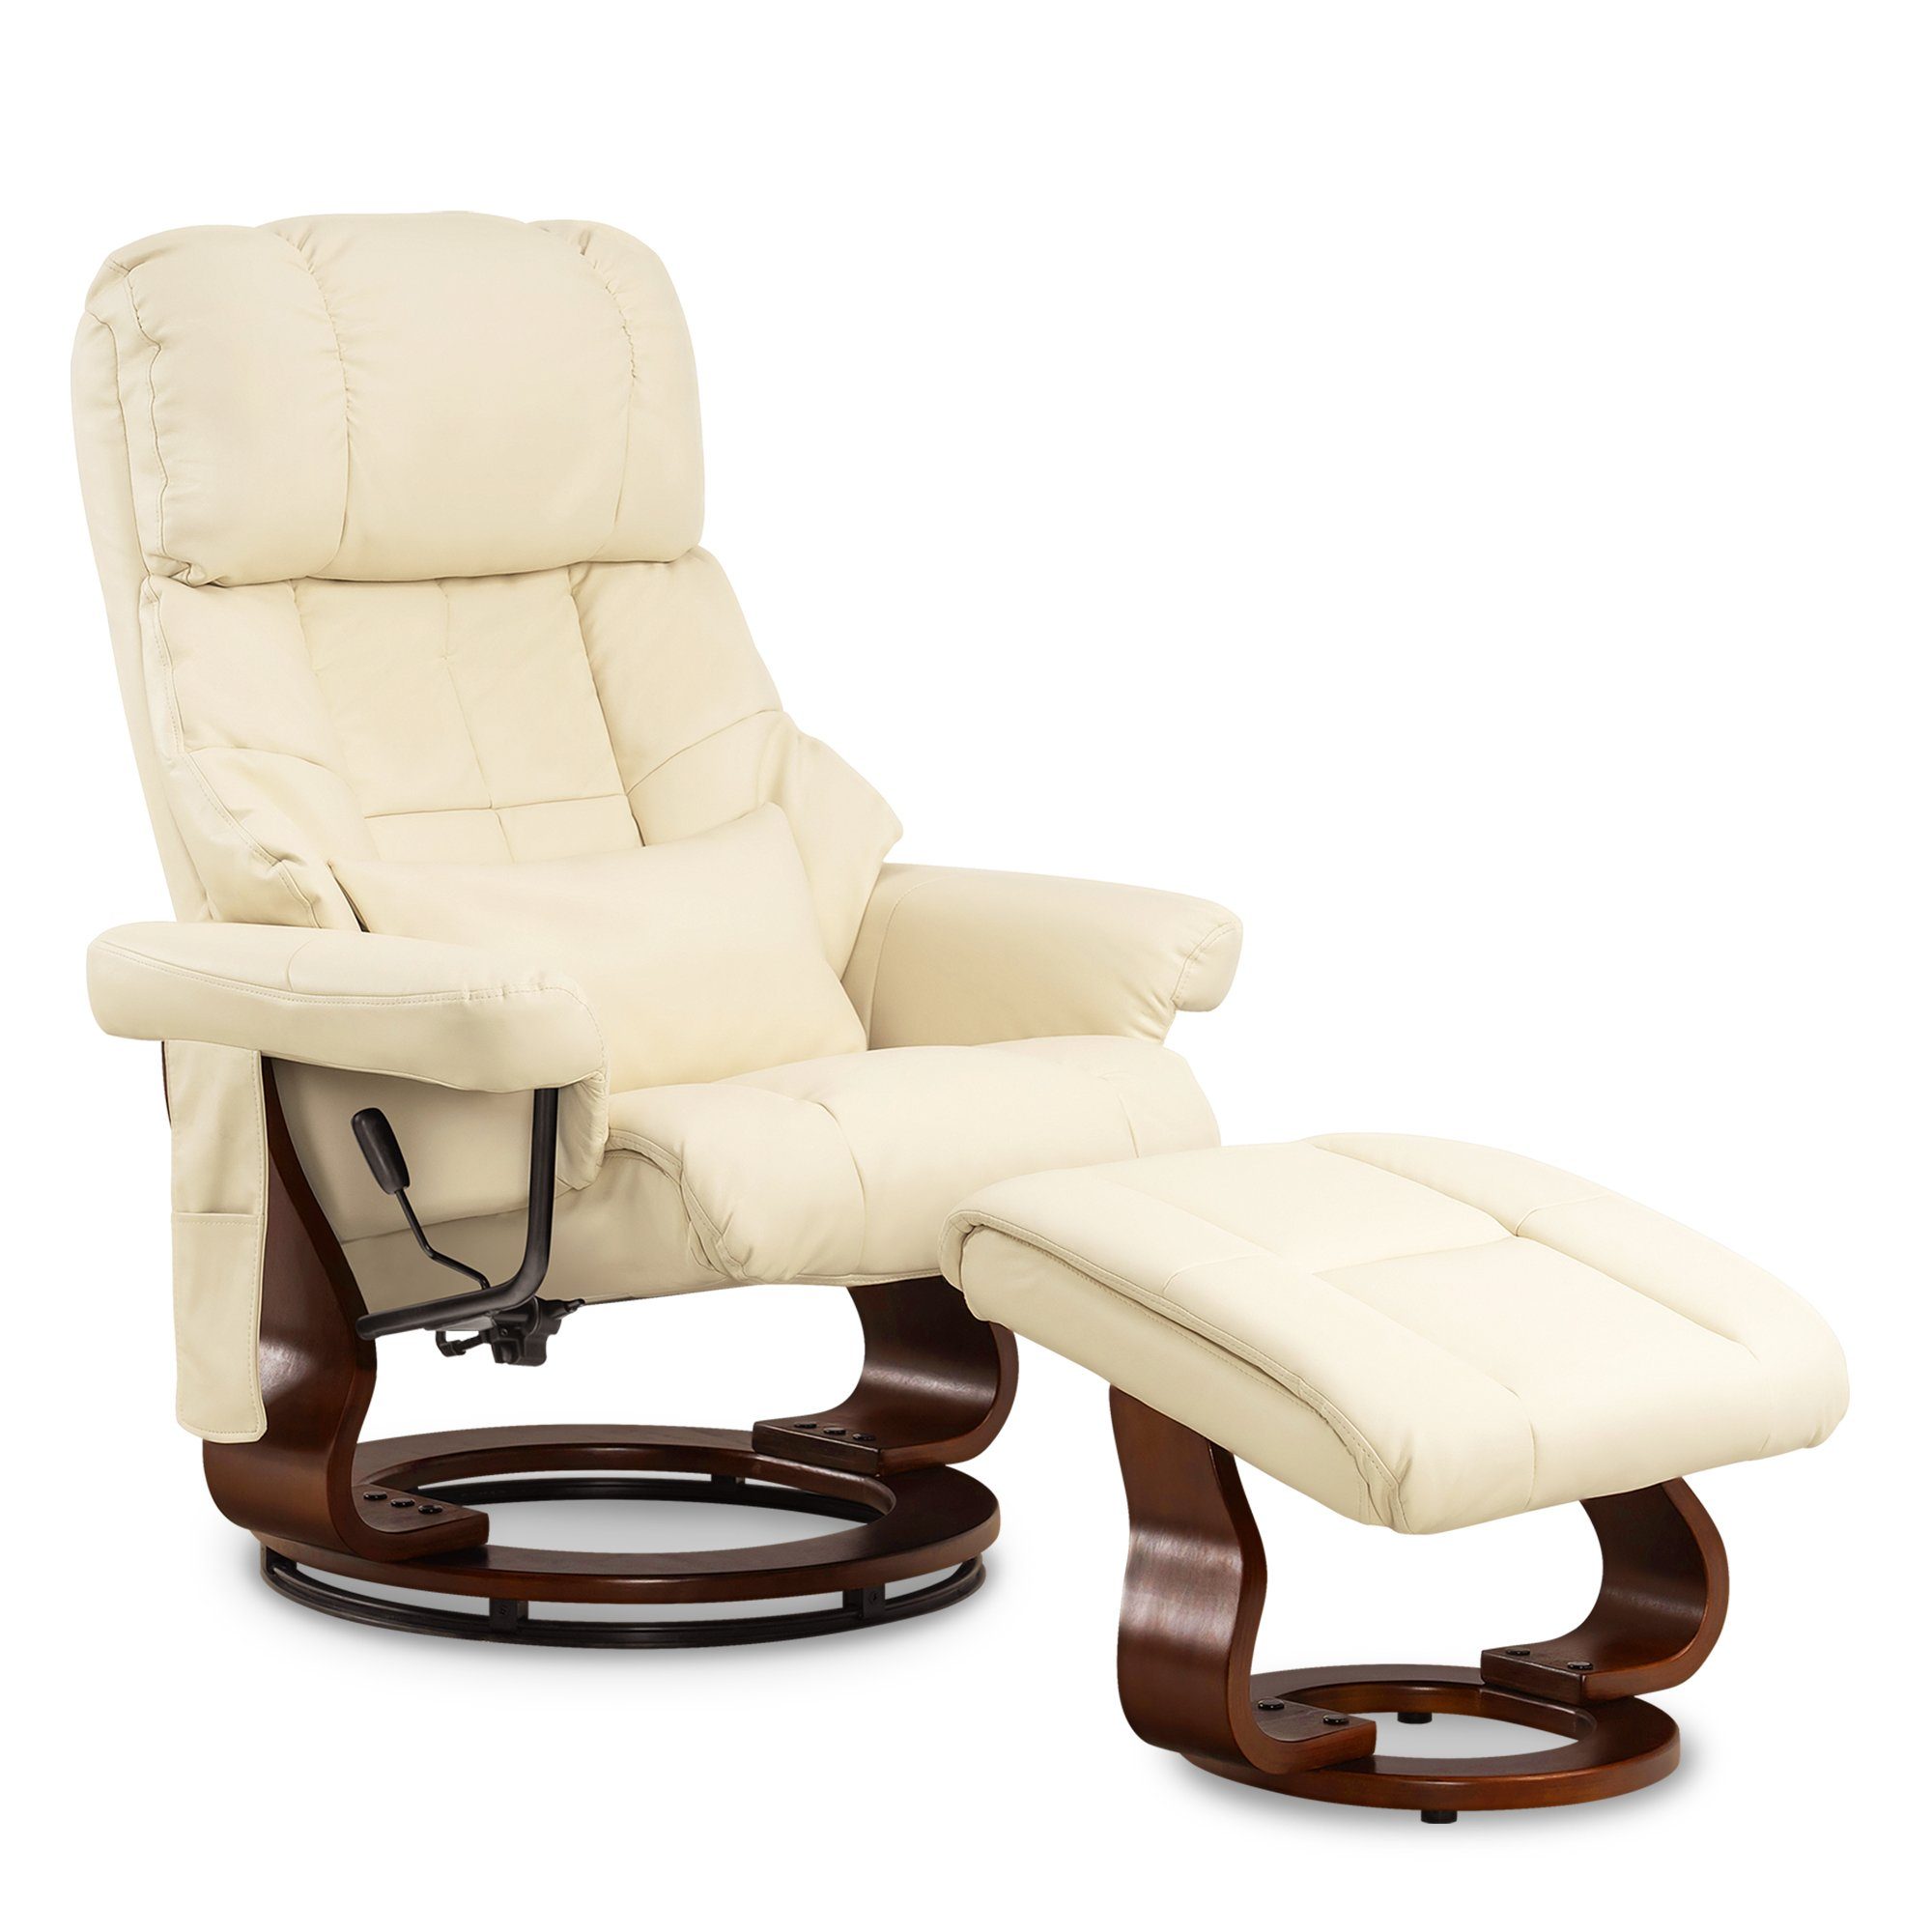 MCombo Relaxsessel MCombo Massagesessel mit Hocker 9068, 360°drehbarer Relaxsessel mit Liegefunktion Creme